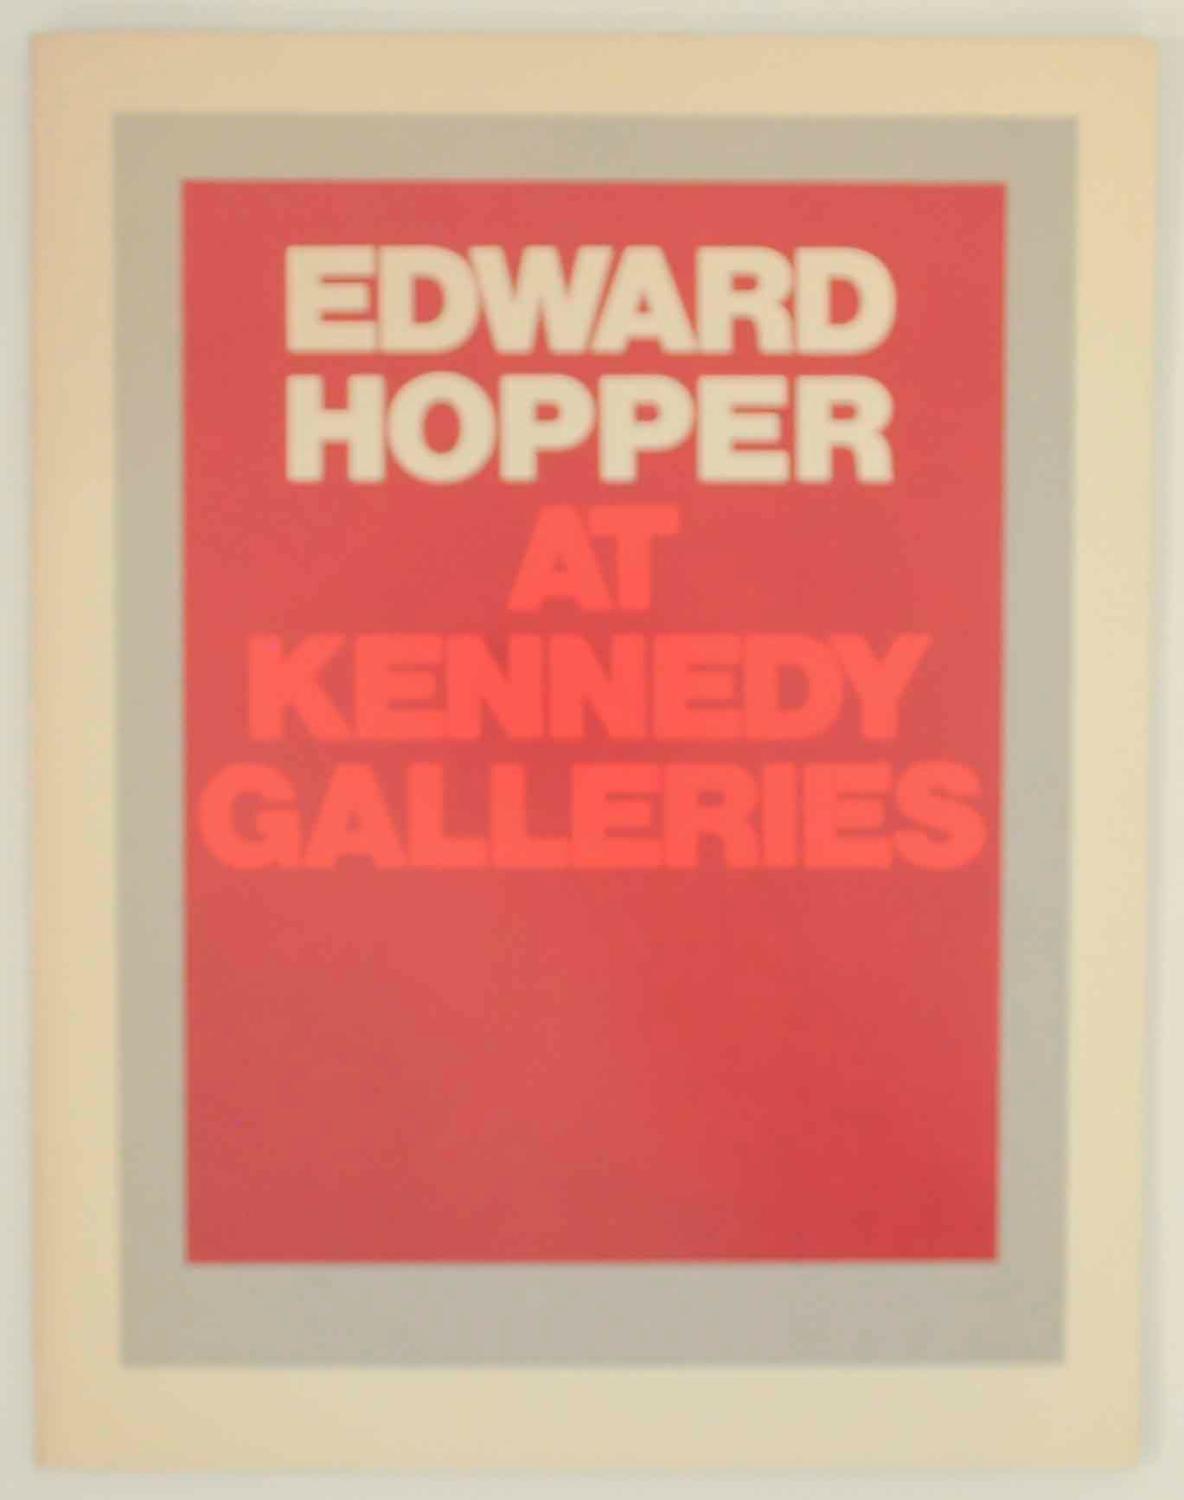 Edward Hopper at Kennedy Galleries